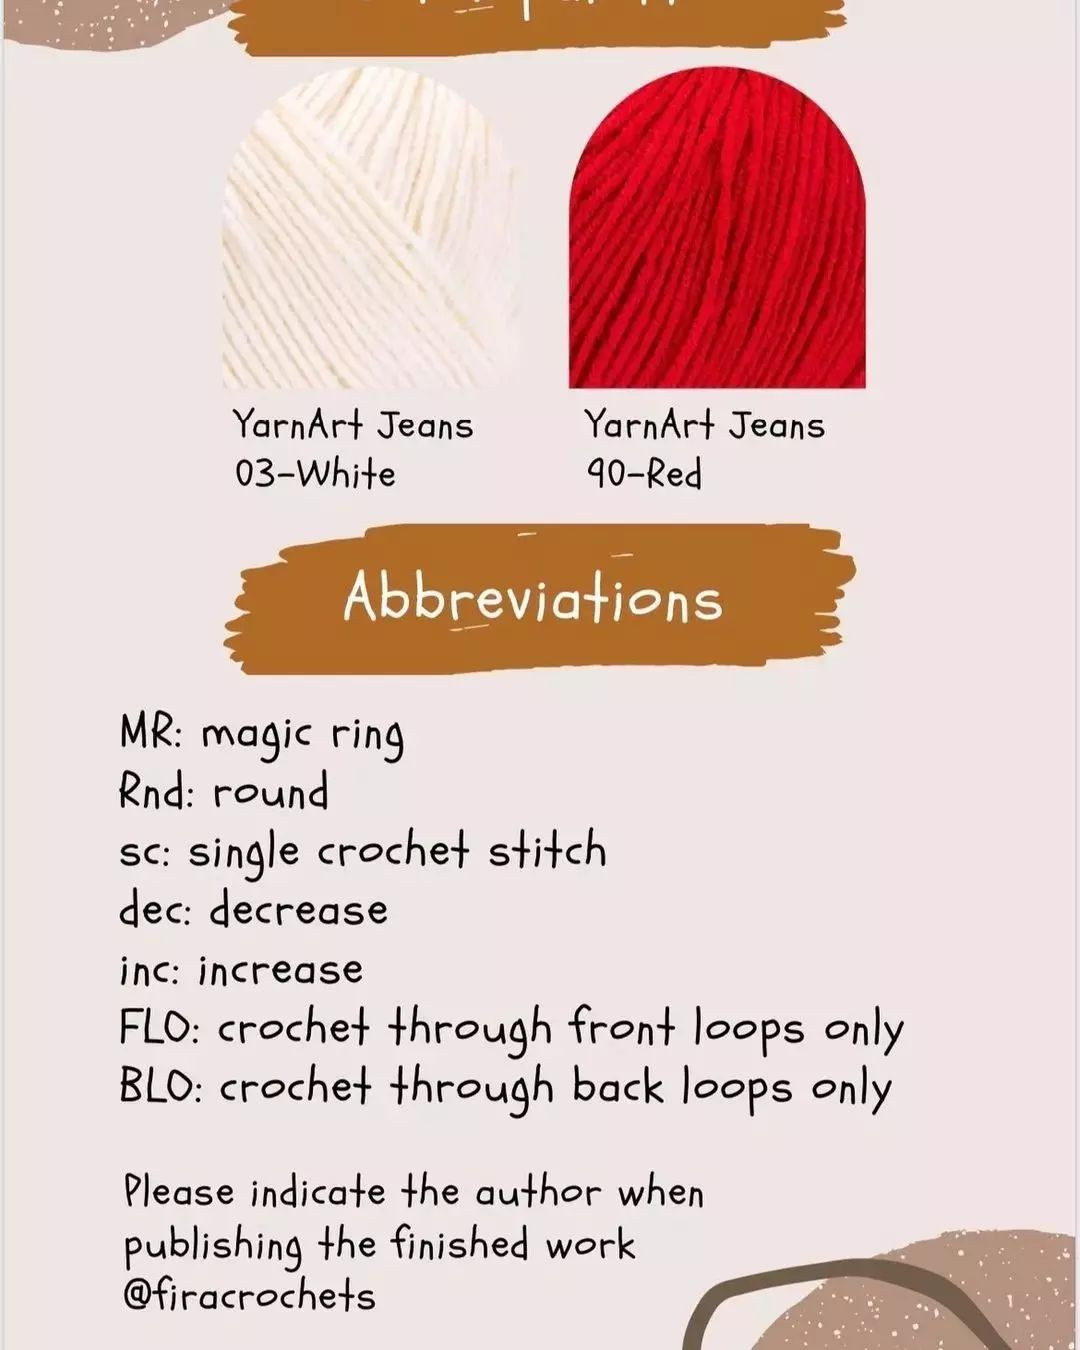 Mushroom crochet pattern with red hat.